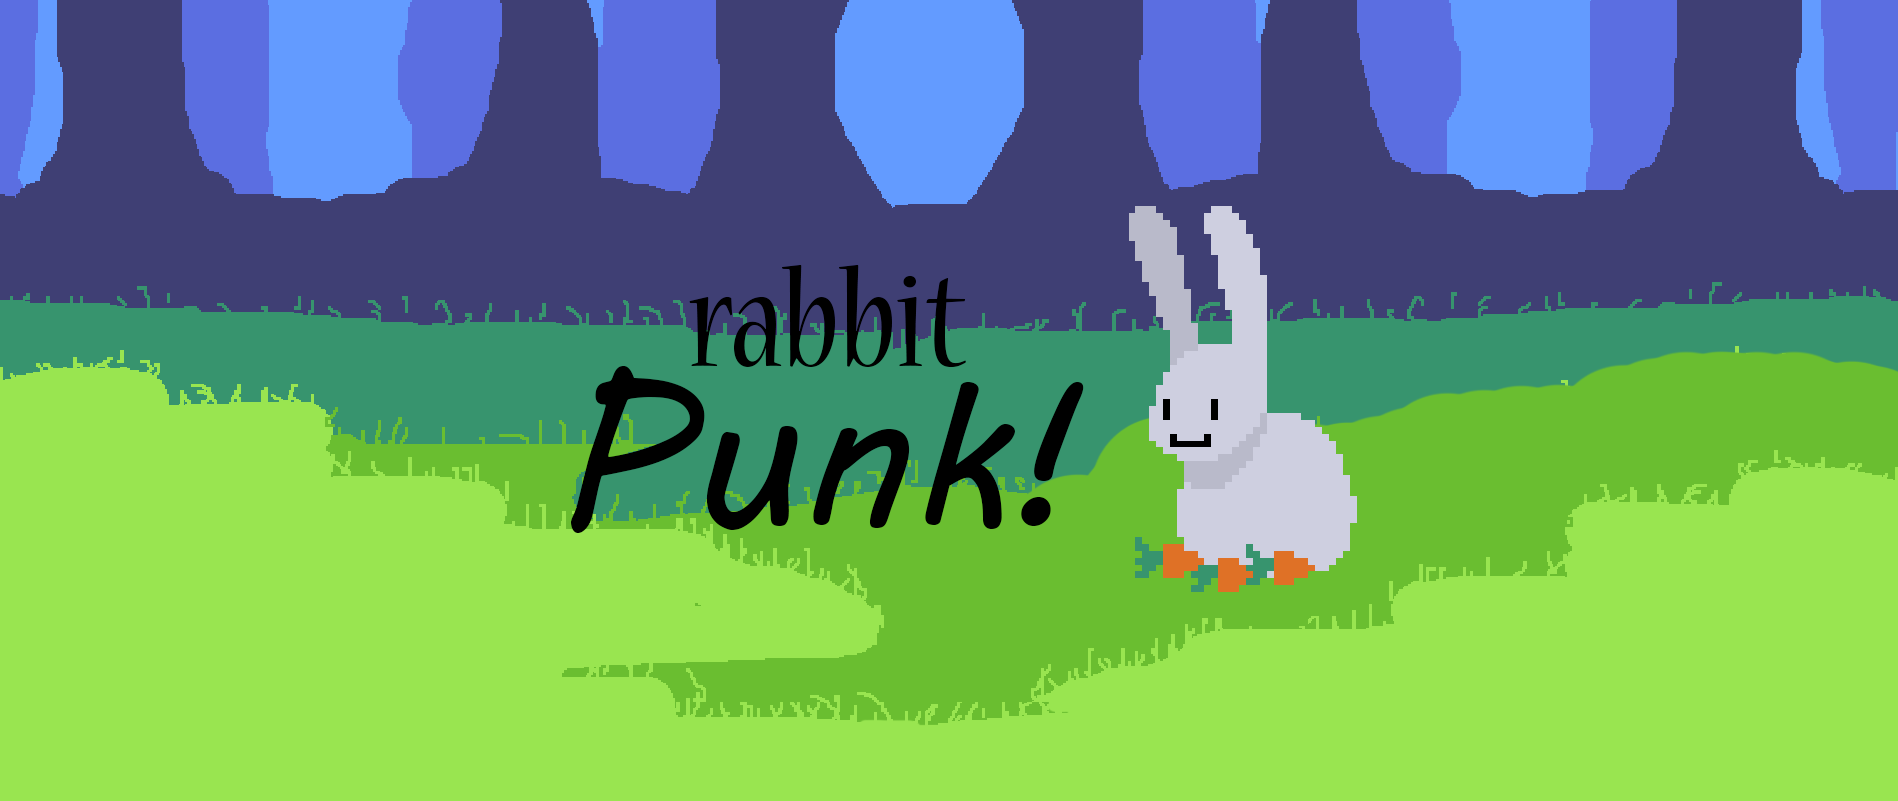 Rabbit Punk!